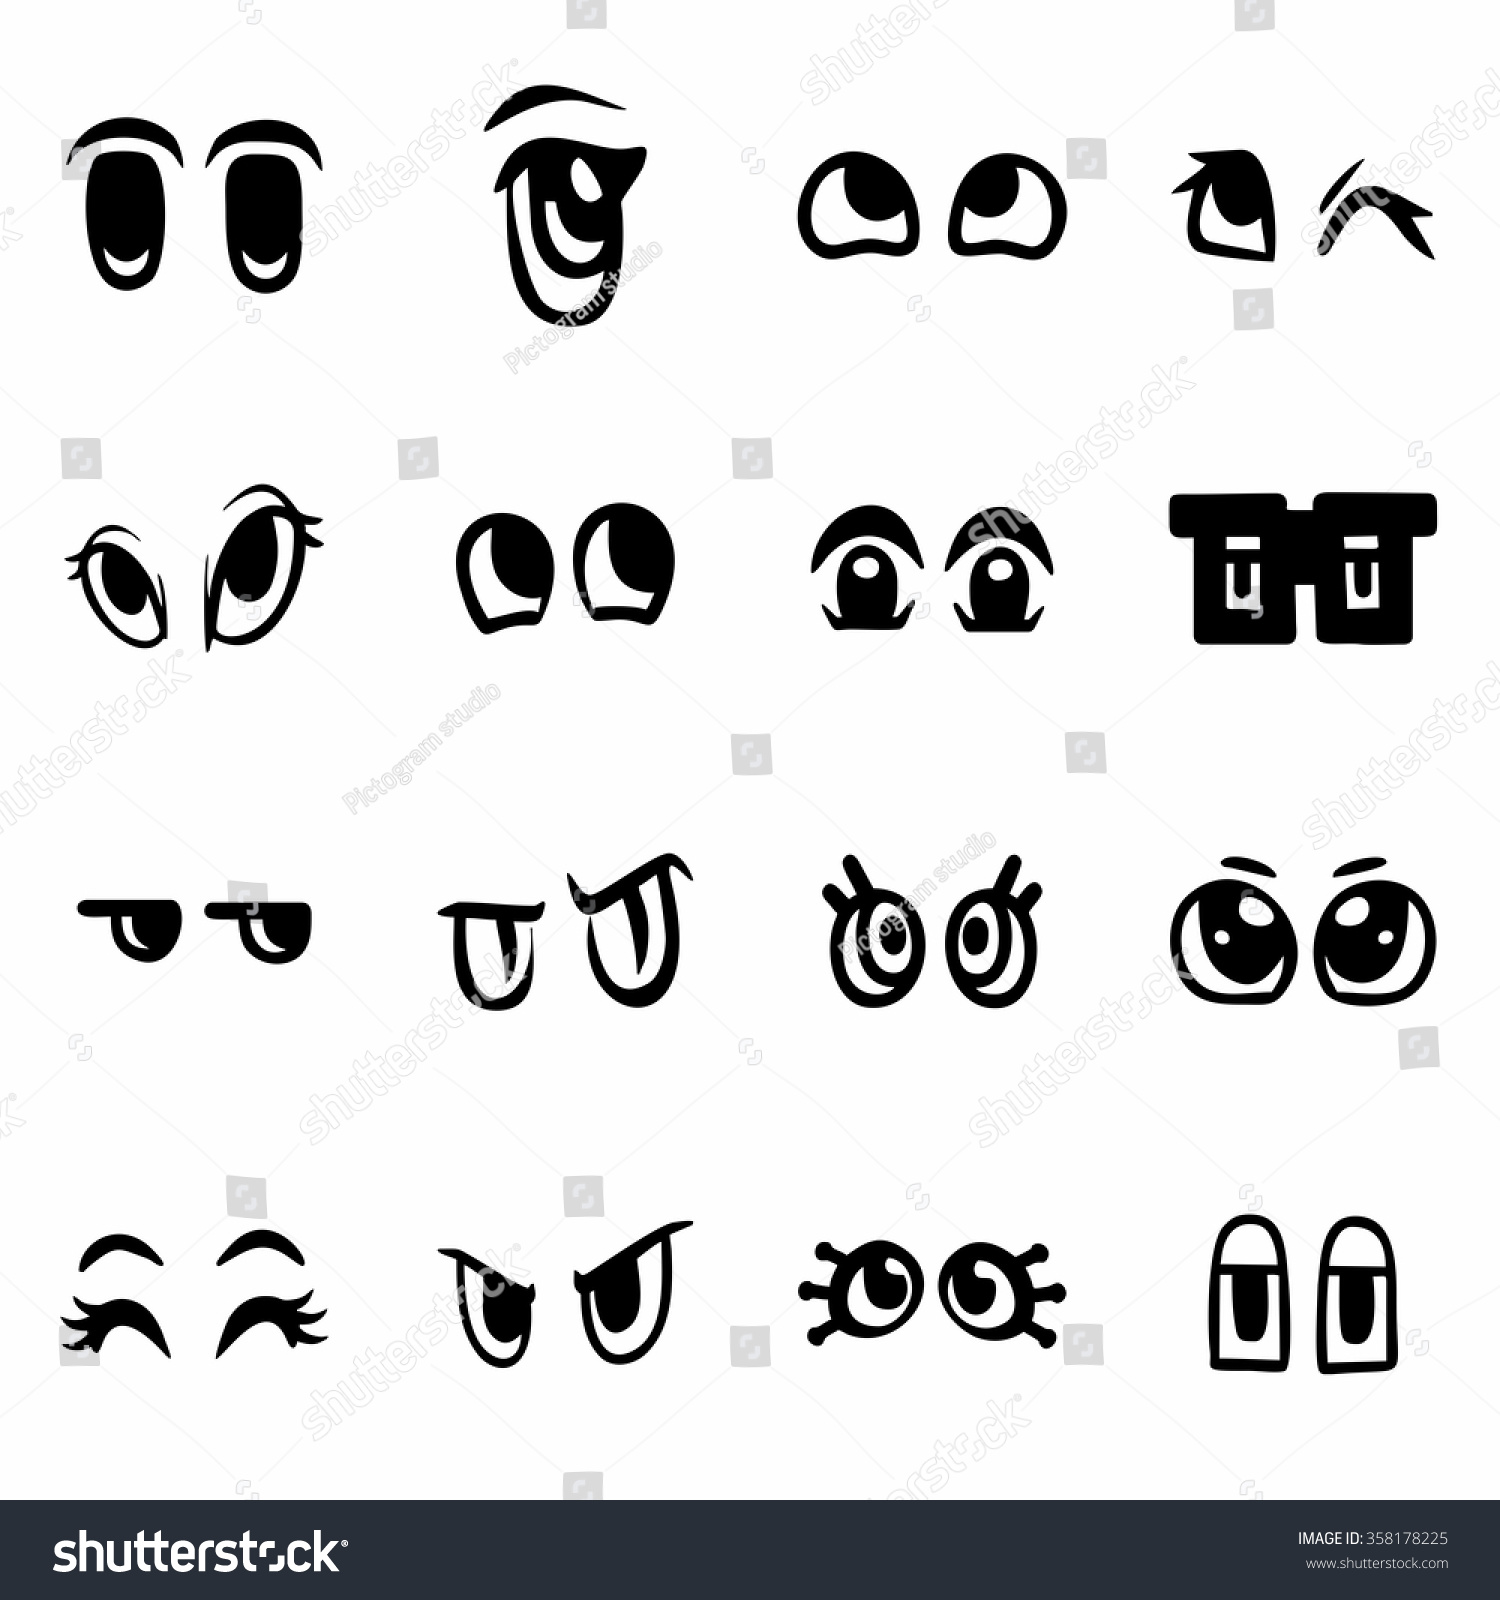 Vector Cartoon Eyes Icon Set On White Background - 358178225 : Shutterstock